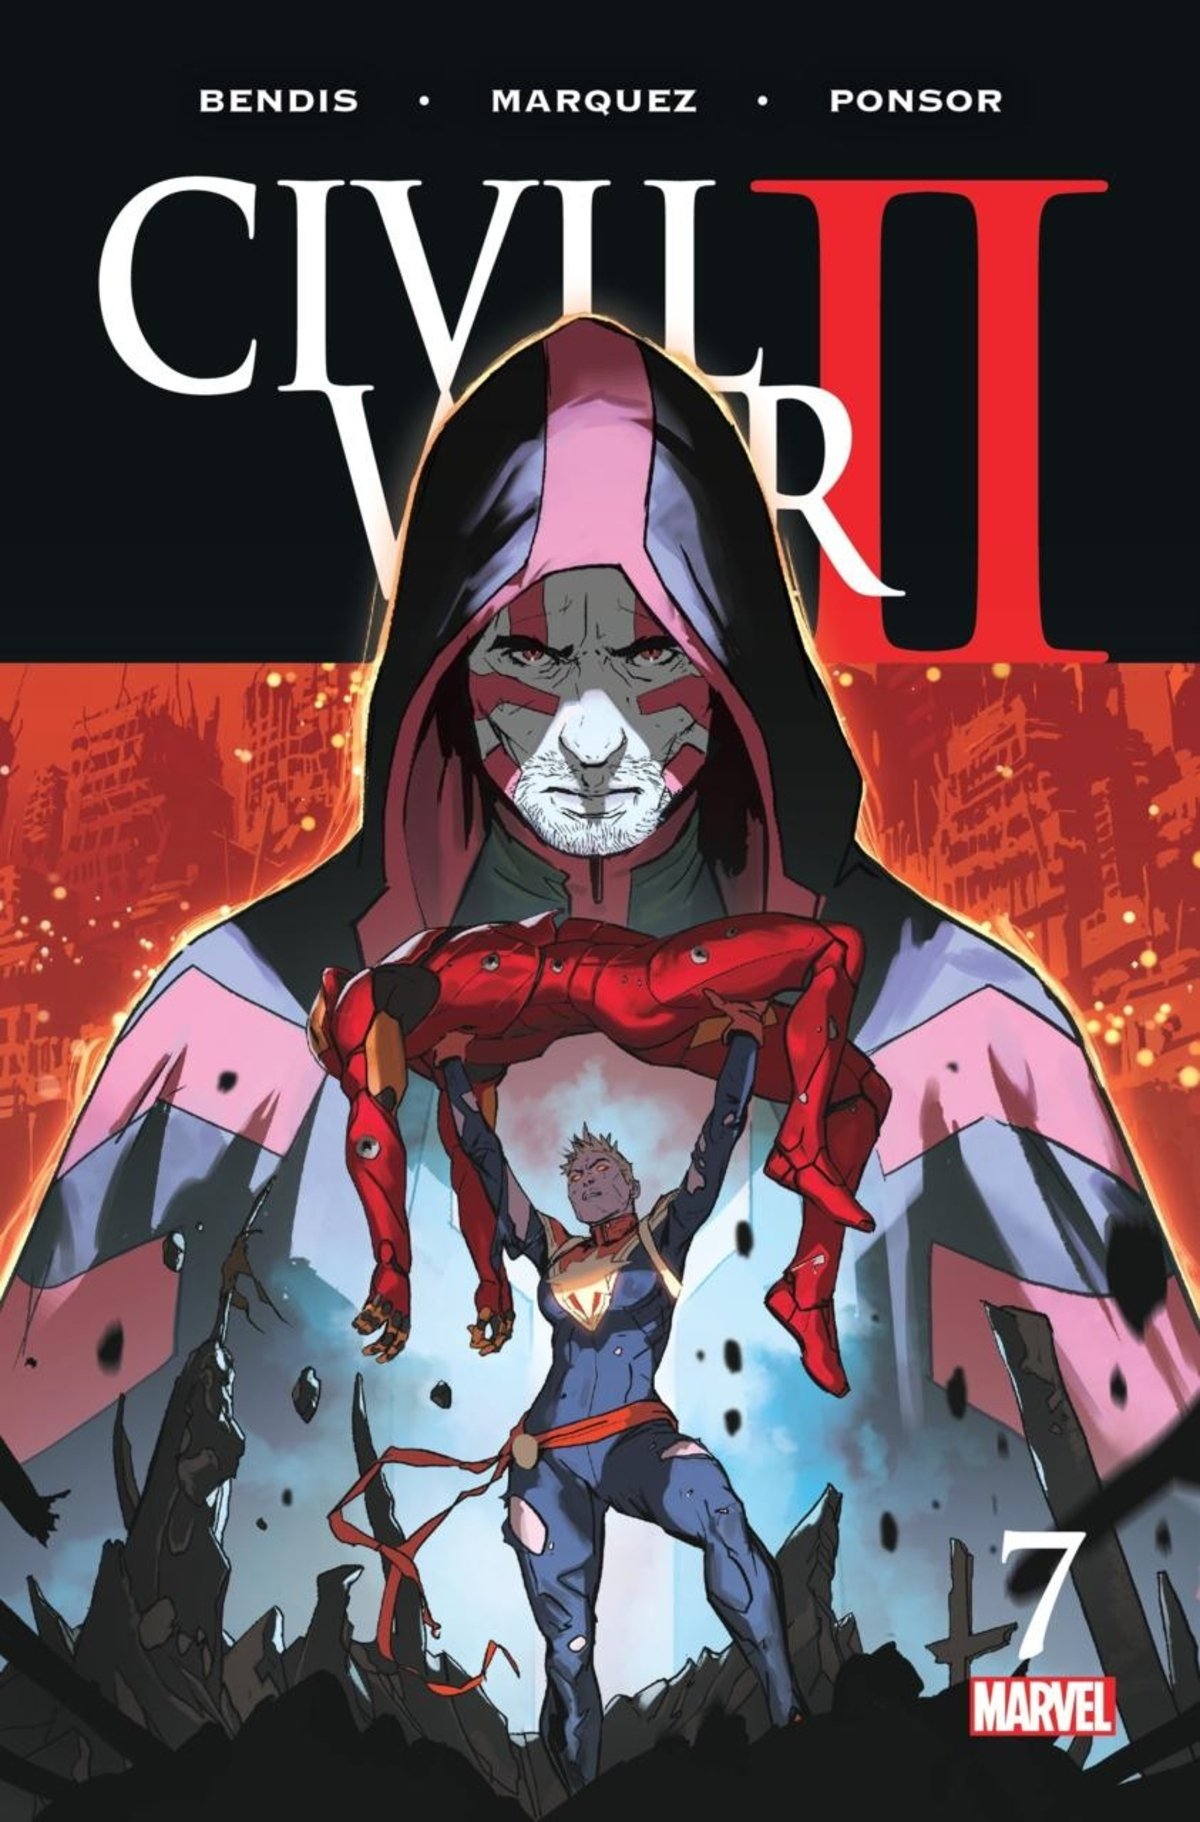 Civil War 2: Marvel mata a otro importante personaje de Los Vengadores